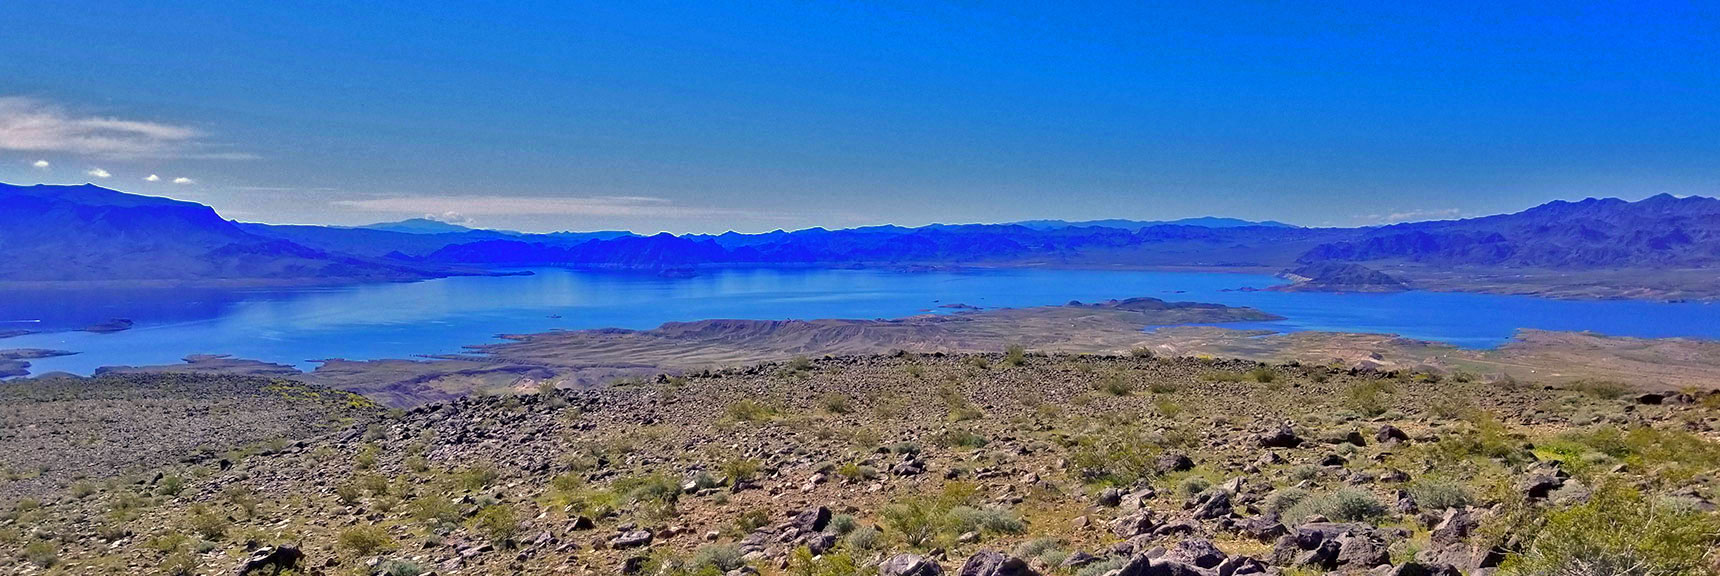 Black Mesa |Lake Mead National Recreation Area, Nevada